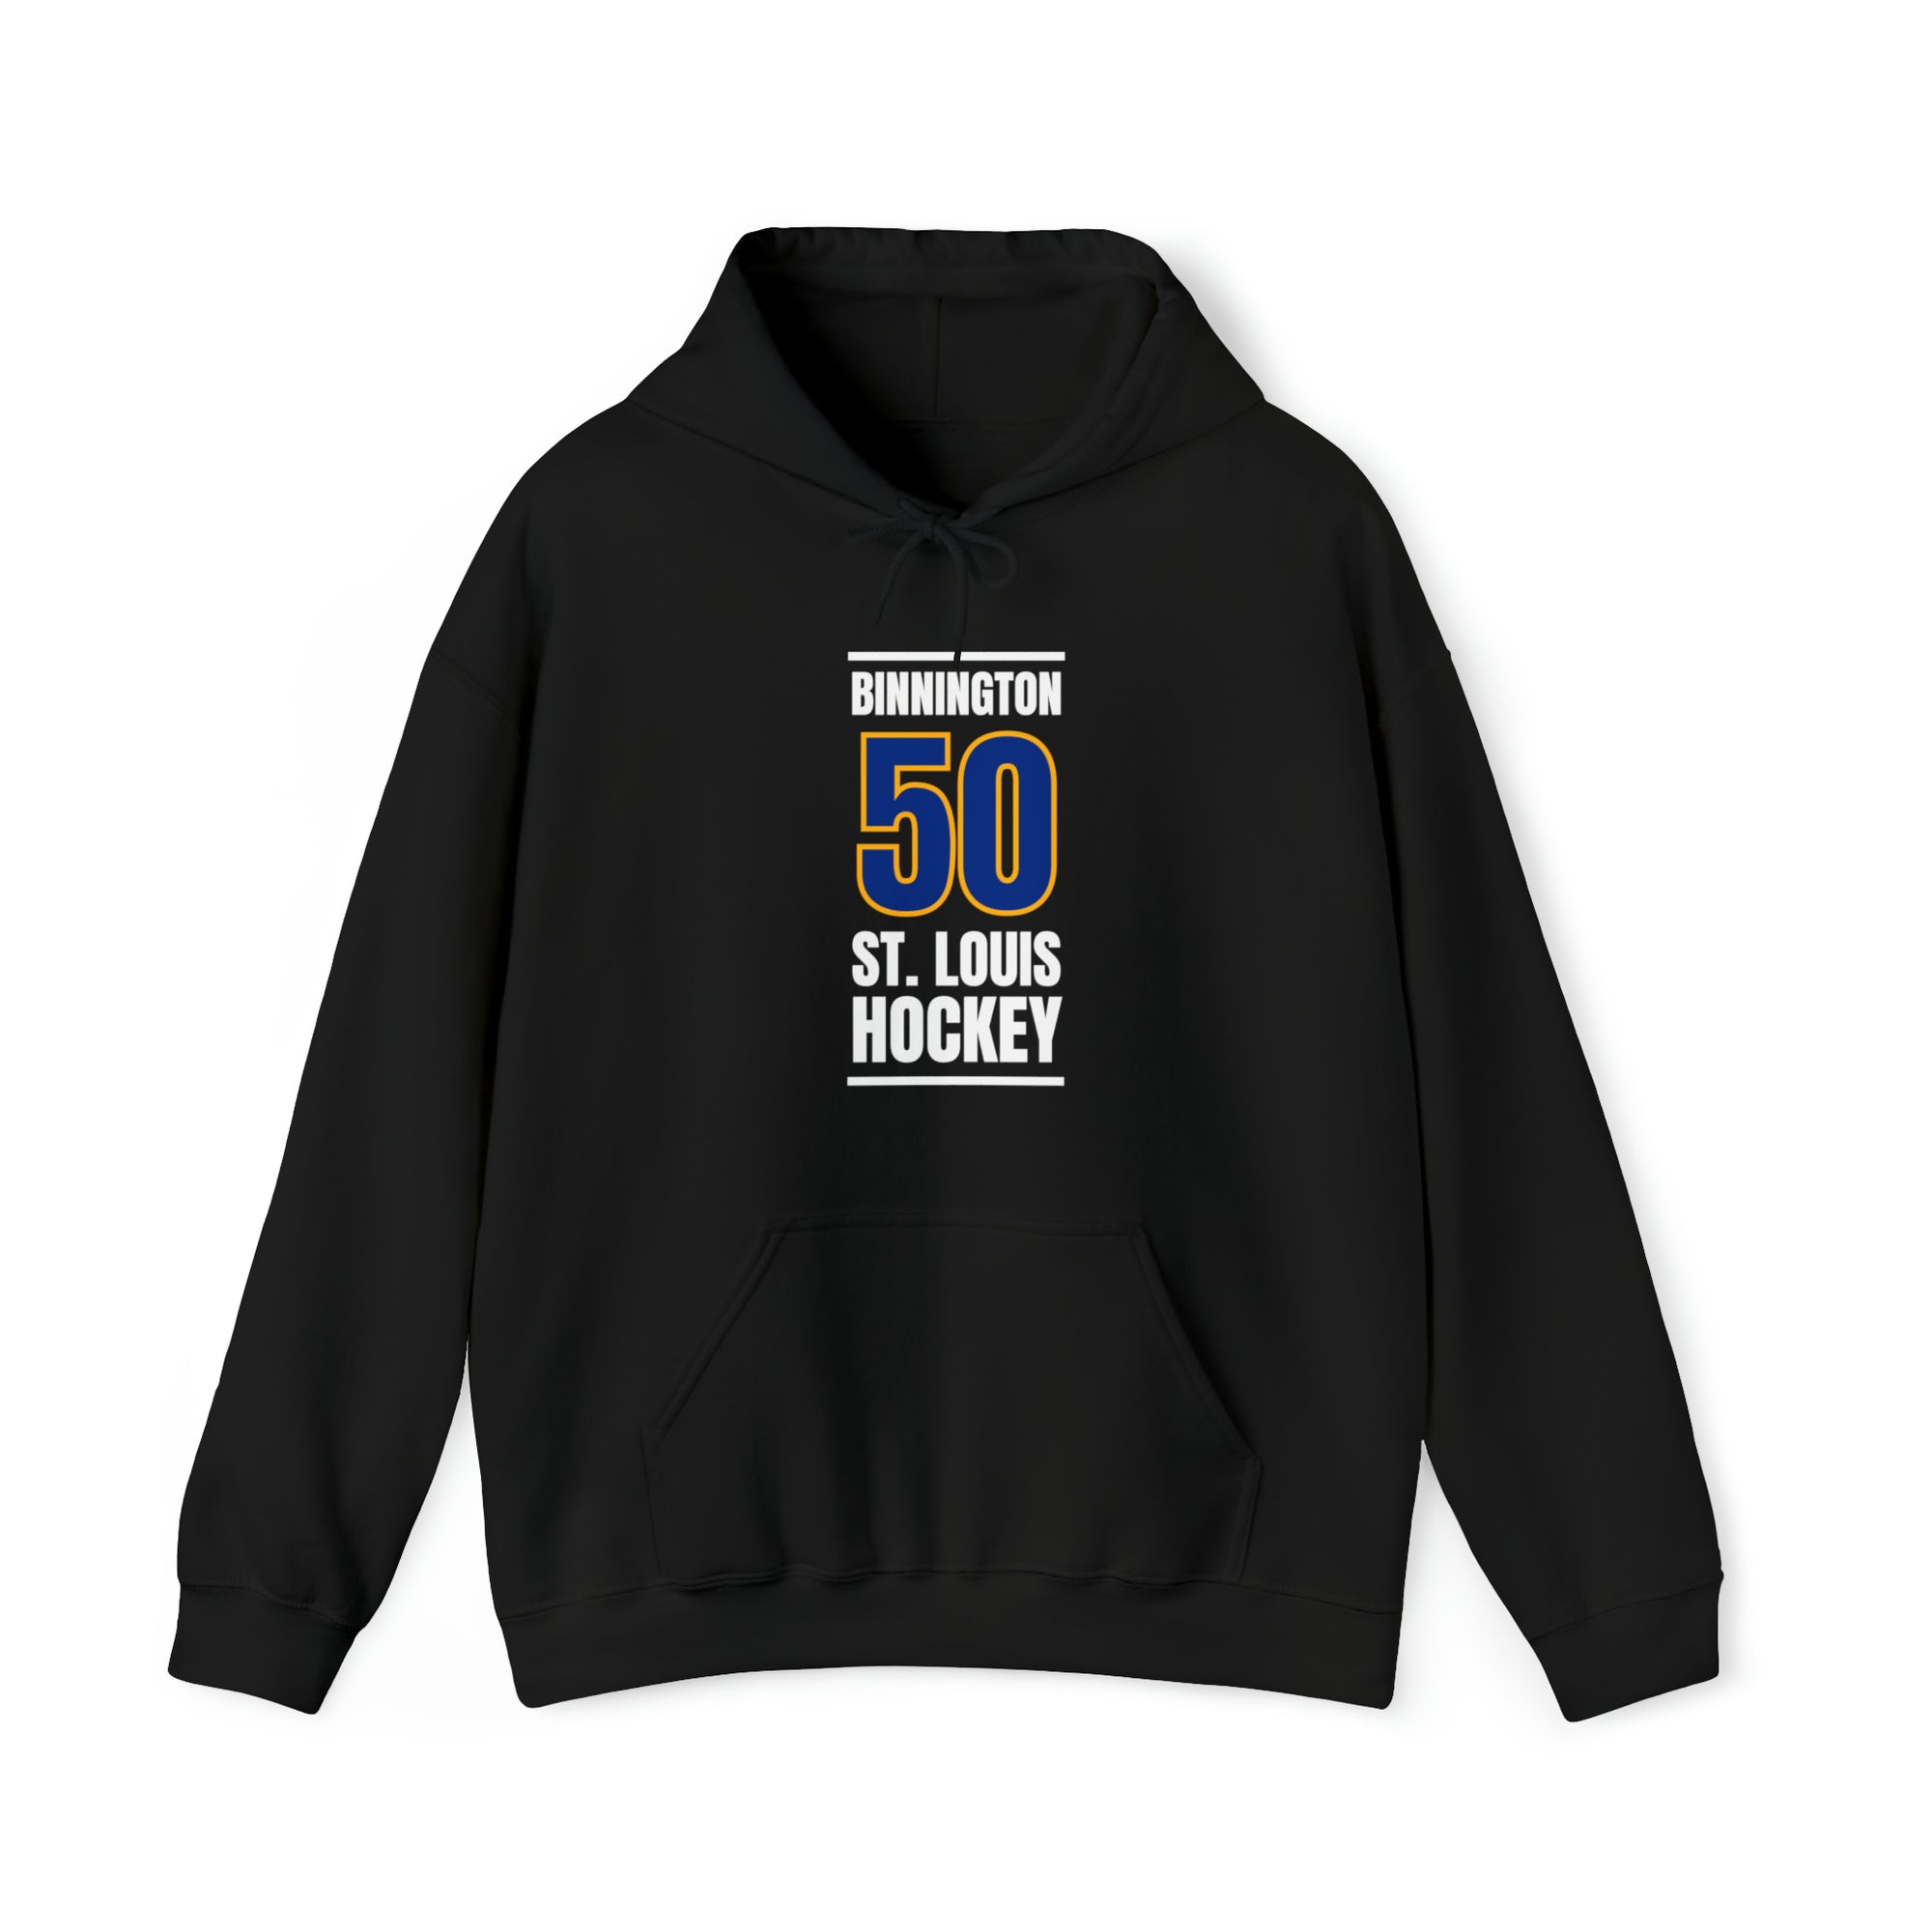 Binnington 50 St. Louis Hockey Blue Vertical Design Unisex Hooded Sweatshirt